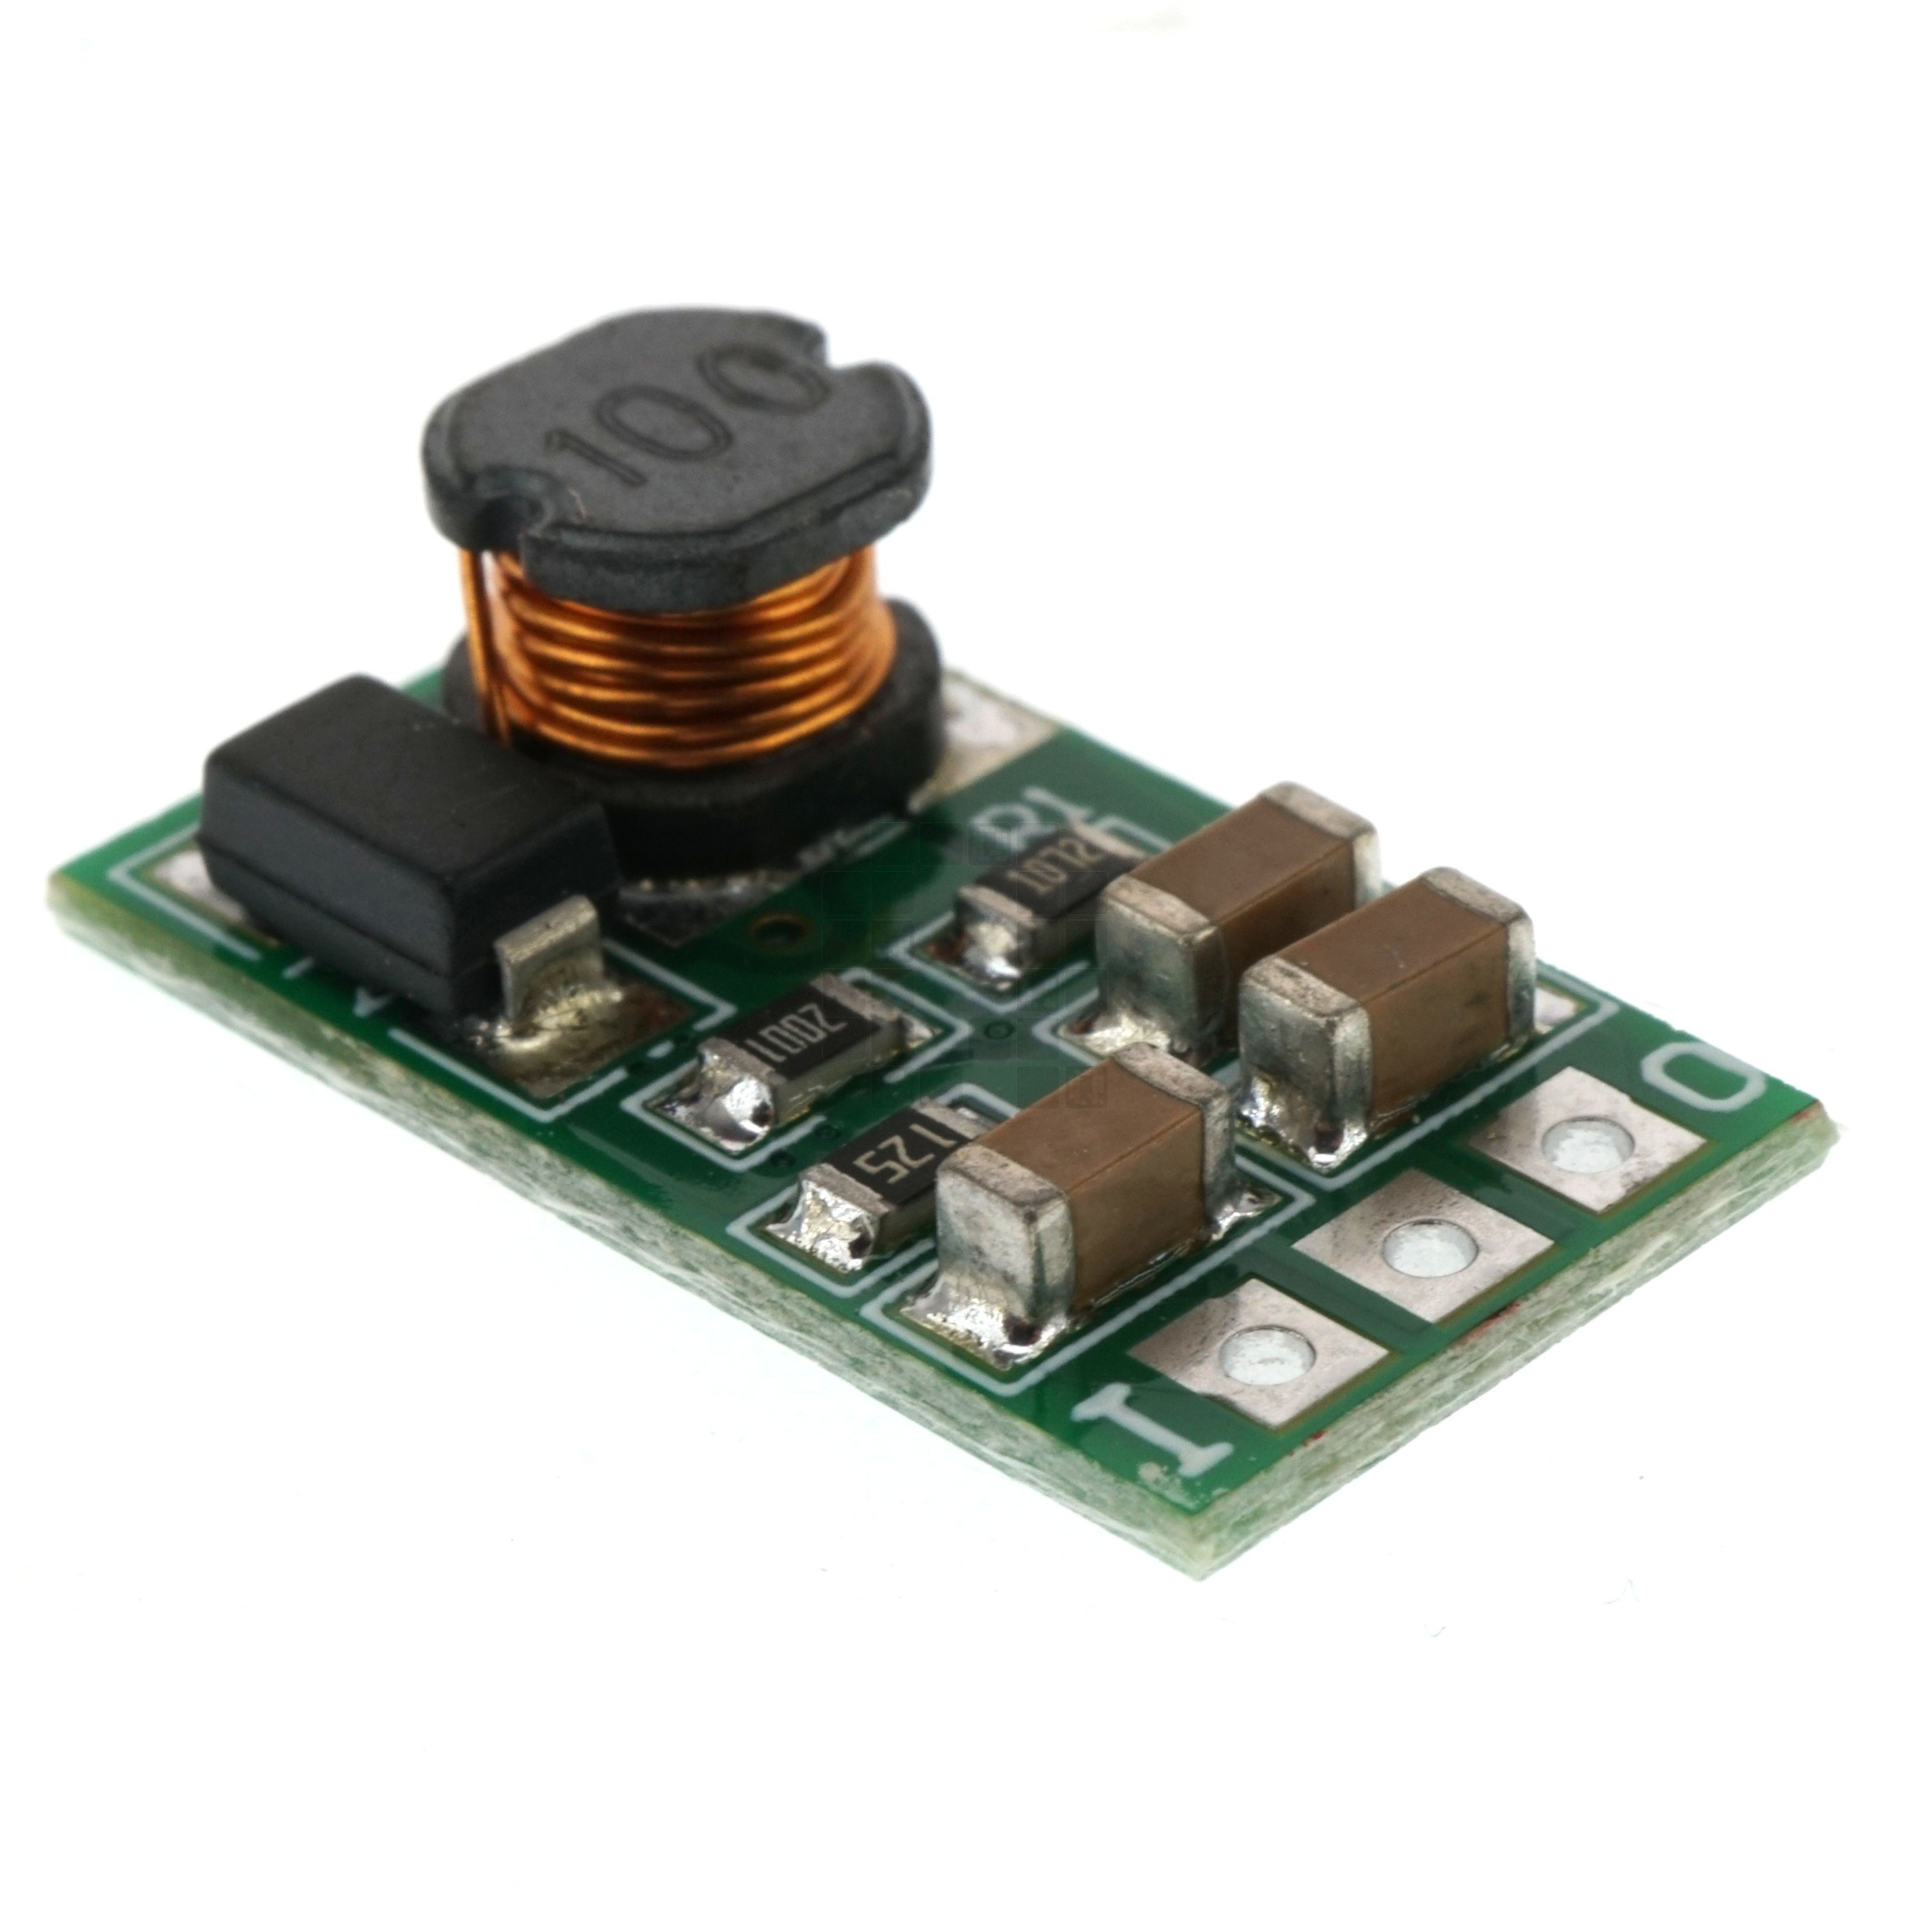 Mini DC-DC Buck Step-Down Voltage Regulator Module, 6.5-40VDC Input, 5.0VDC Output